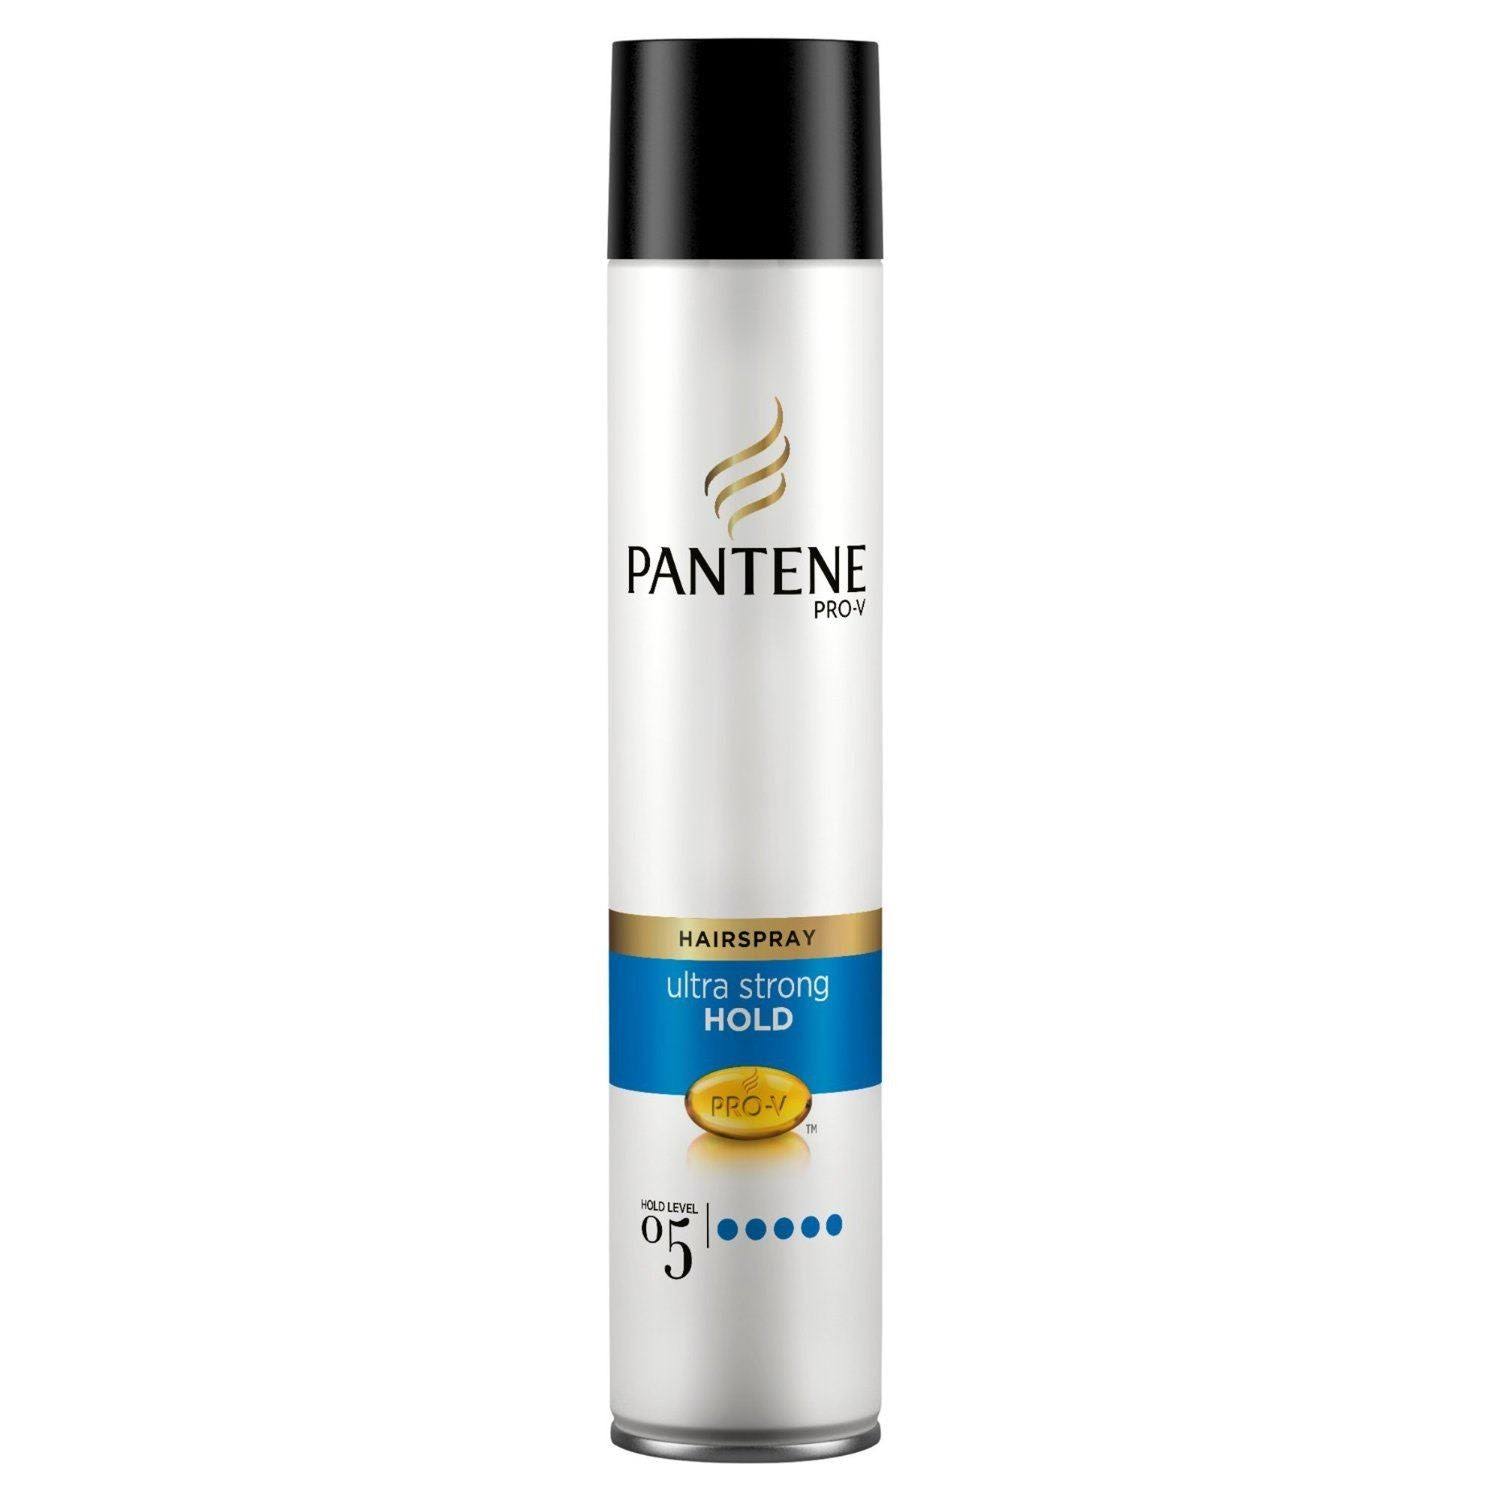 Pantene Pro V Ultra Strong Hold Hairspray - 300ml